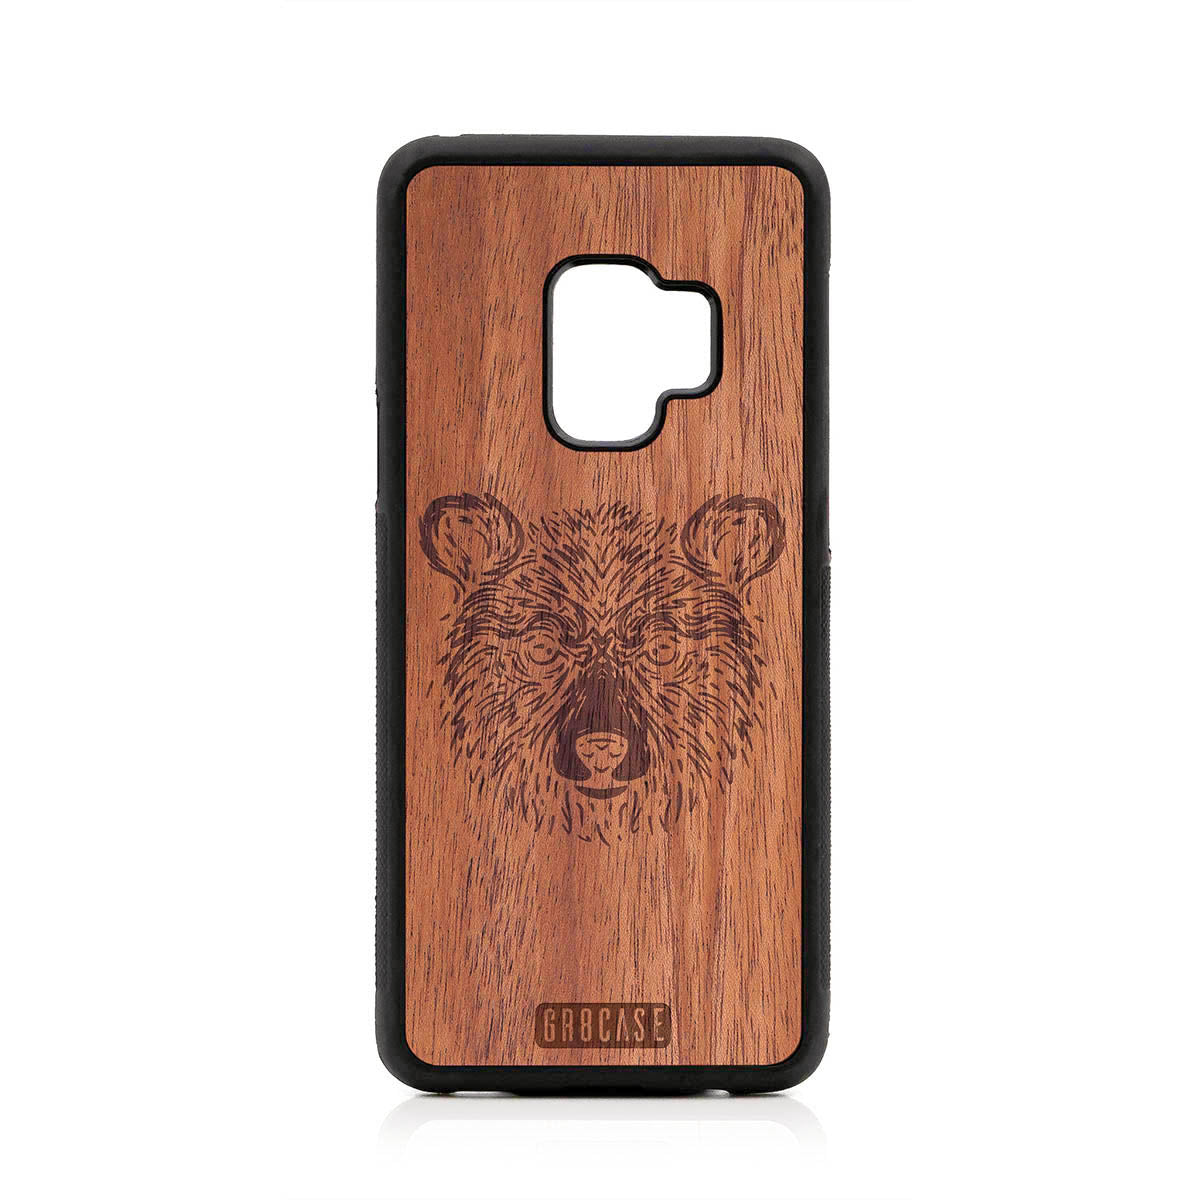 Furry Bear Design Wood Case For Samsung Galaxy S9